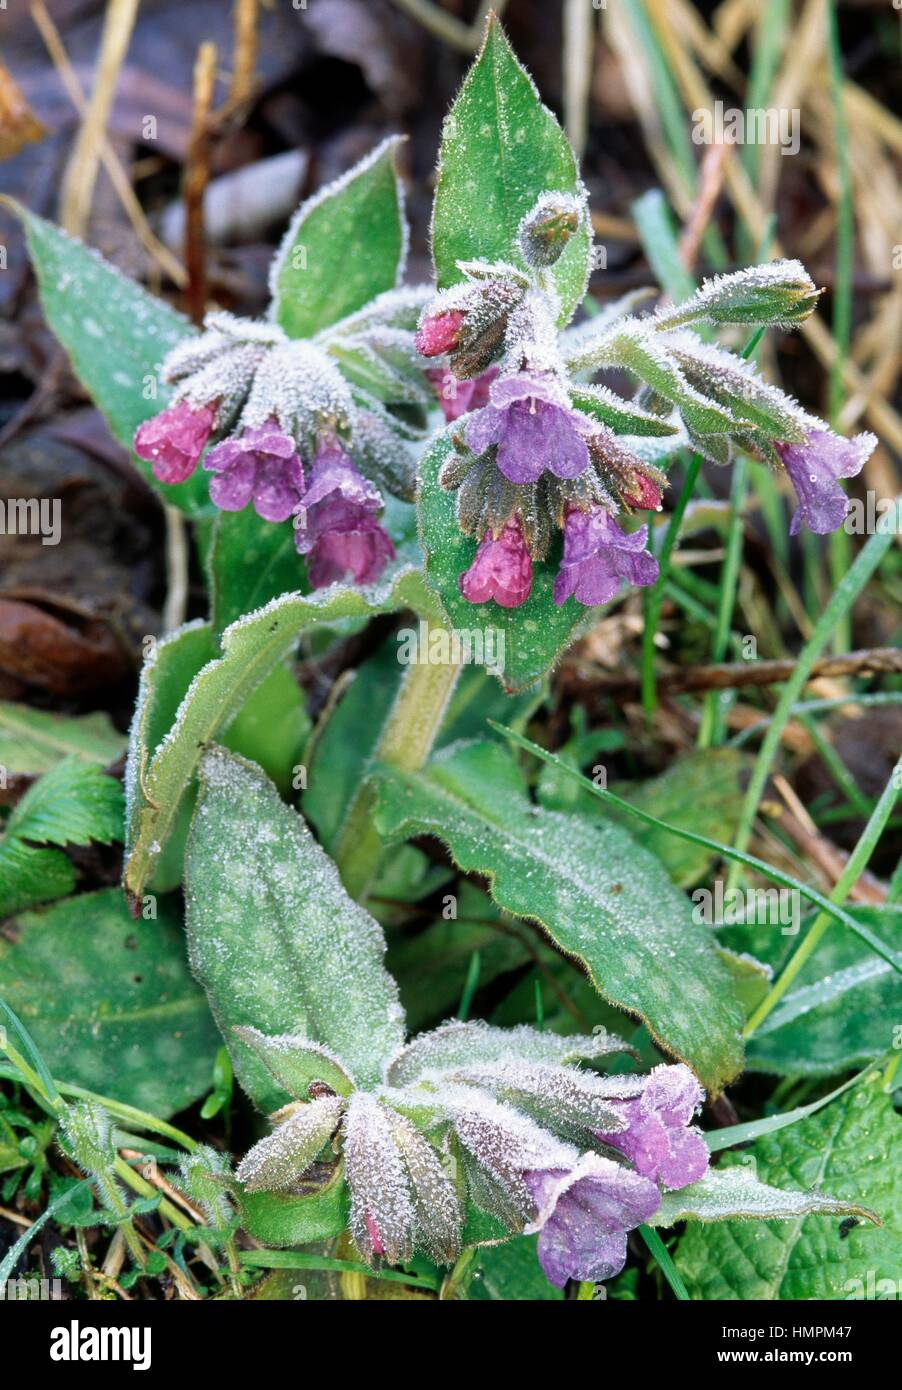 Common lungwort or Our lady's milk drops (Pulmonaria officinalis), Boraginaceae. Stock Photo